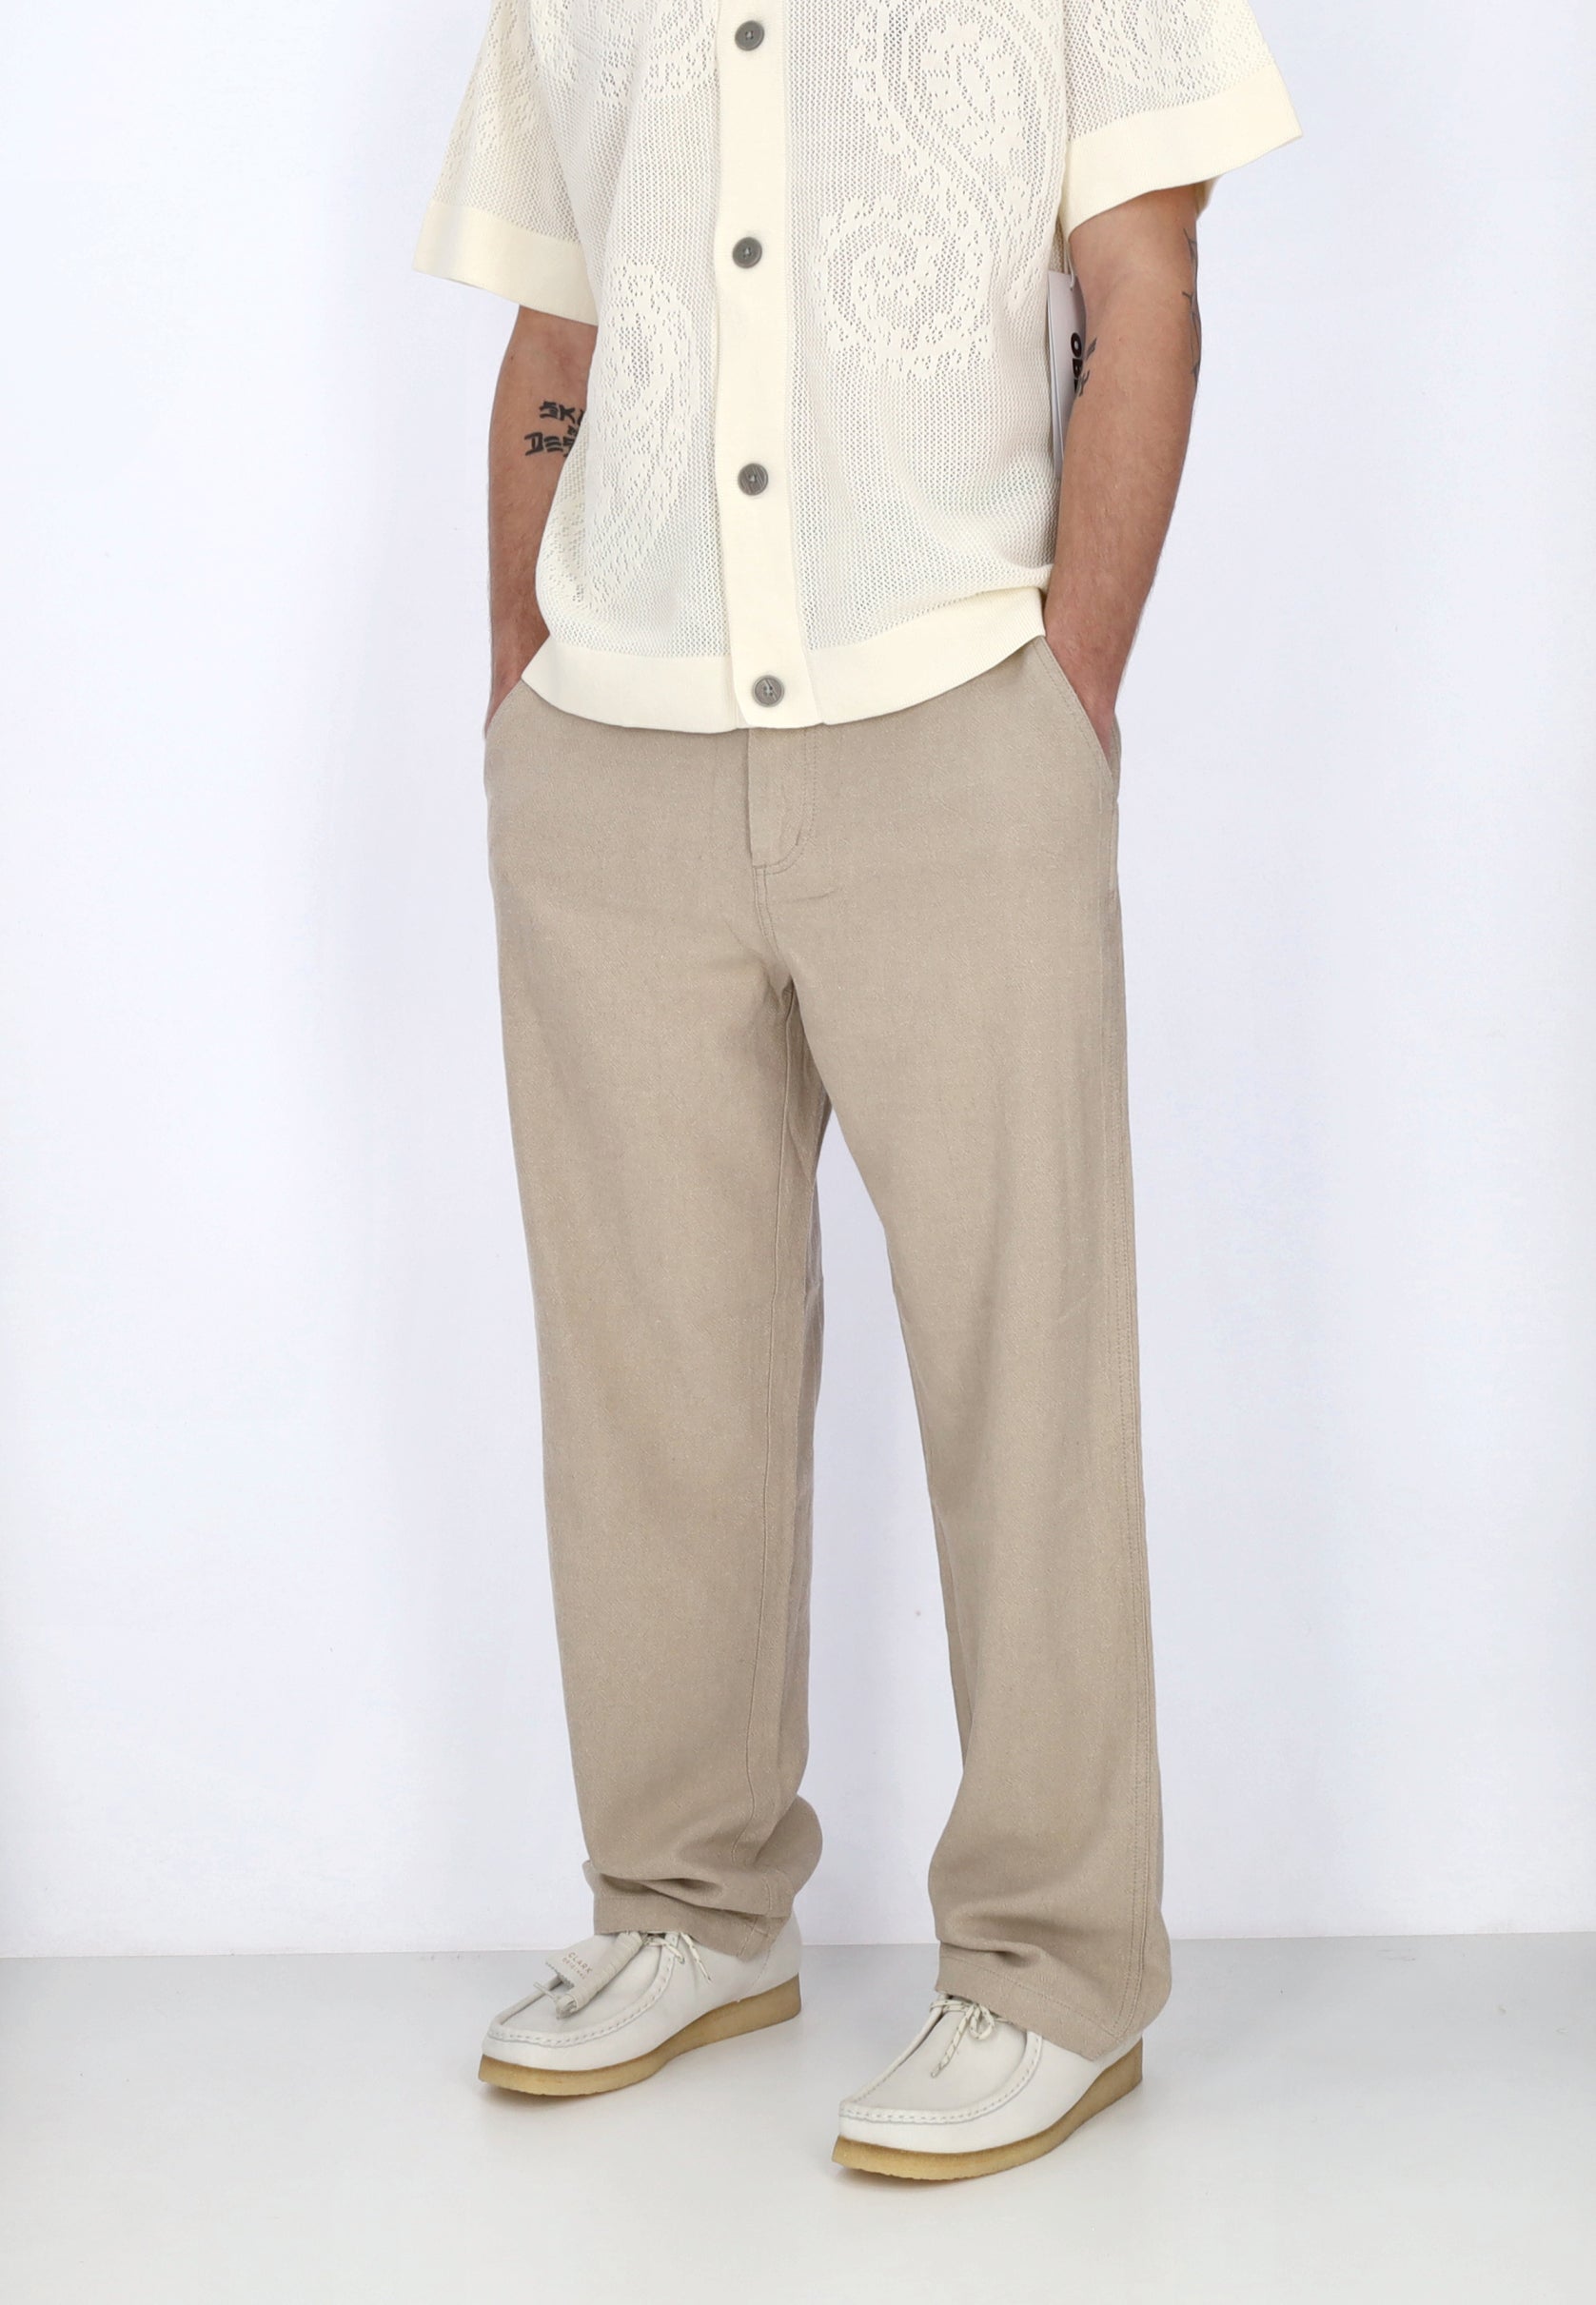 Pantalone Lungo Uomo Hardwork Linen Carpenter Pant Oatmeal 142020233